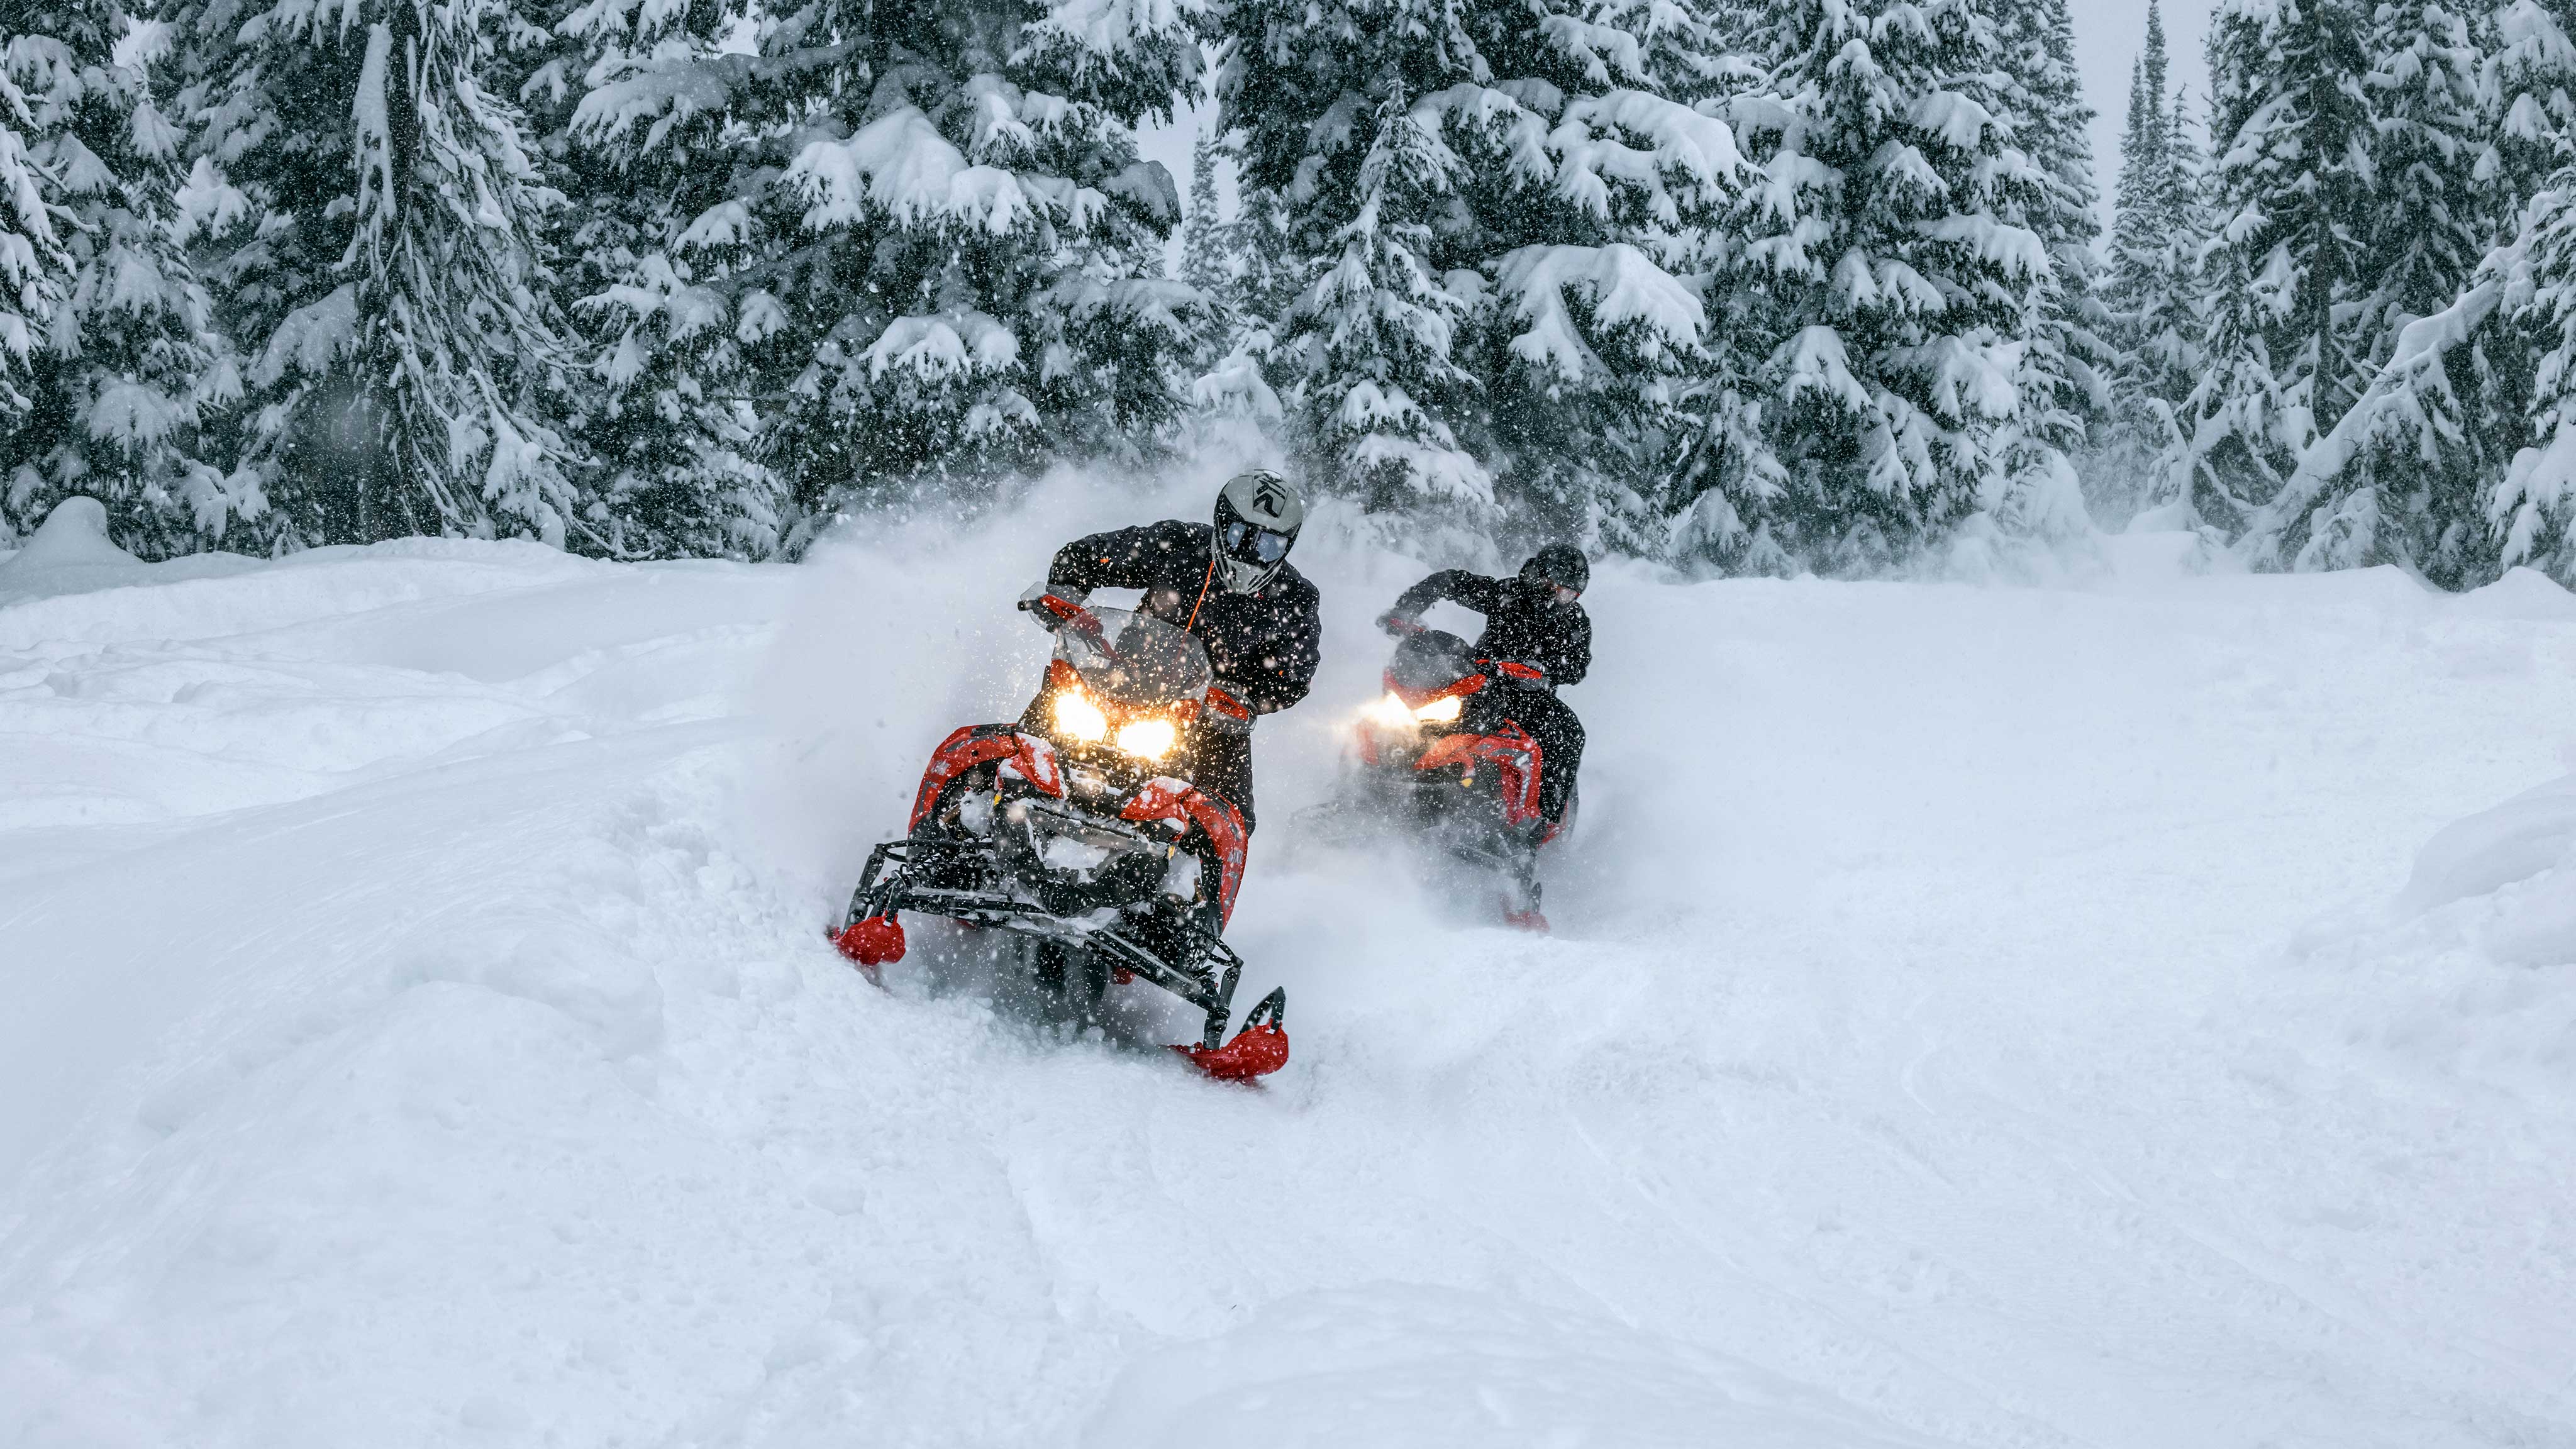 2 riders riding their Lynx snowmobile across a snowy field